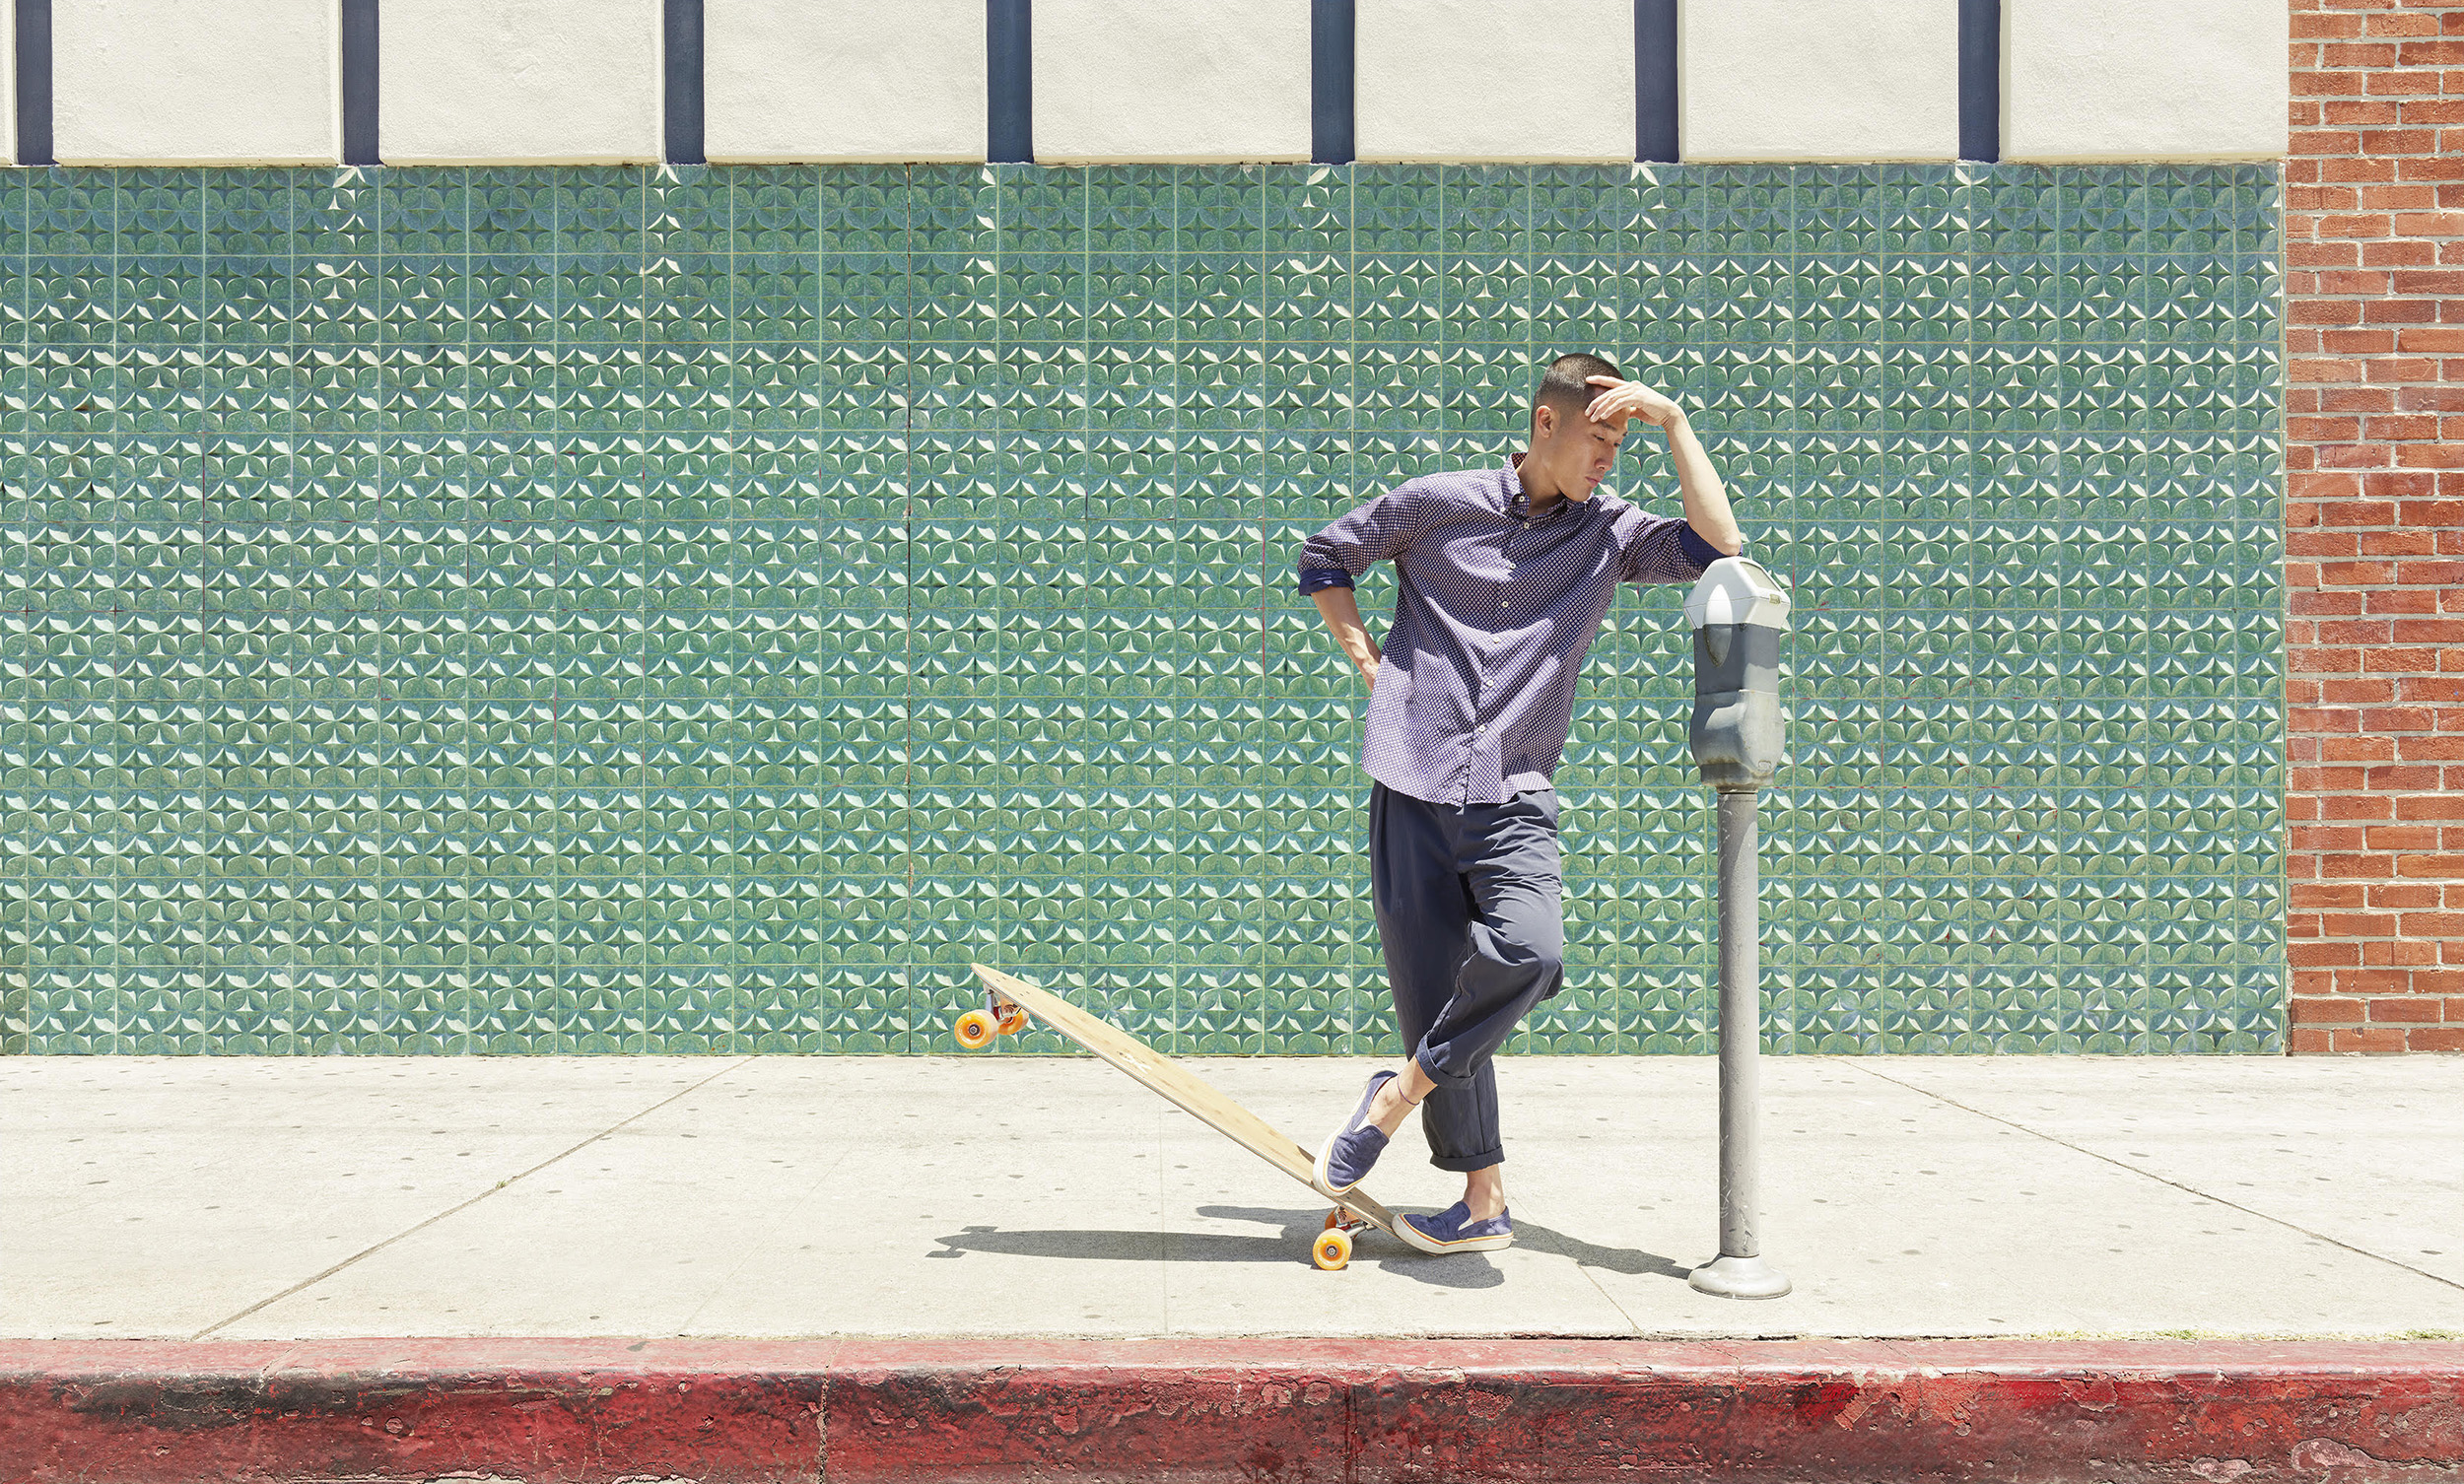 LA_creative_skateboardman